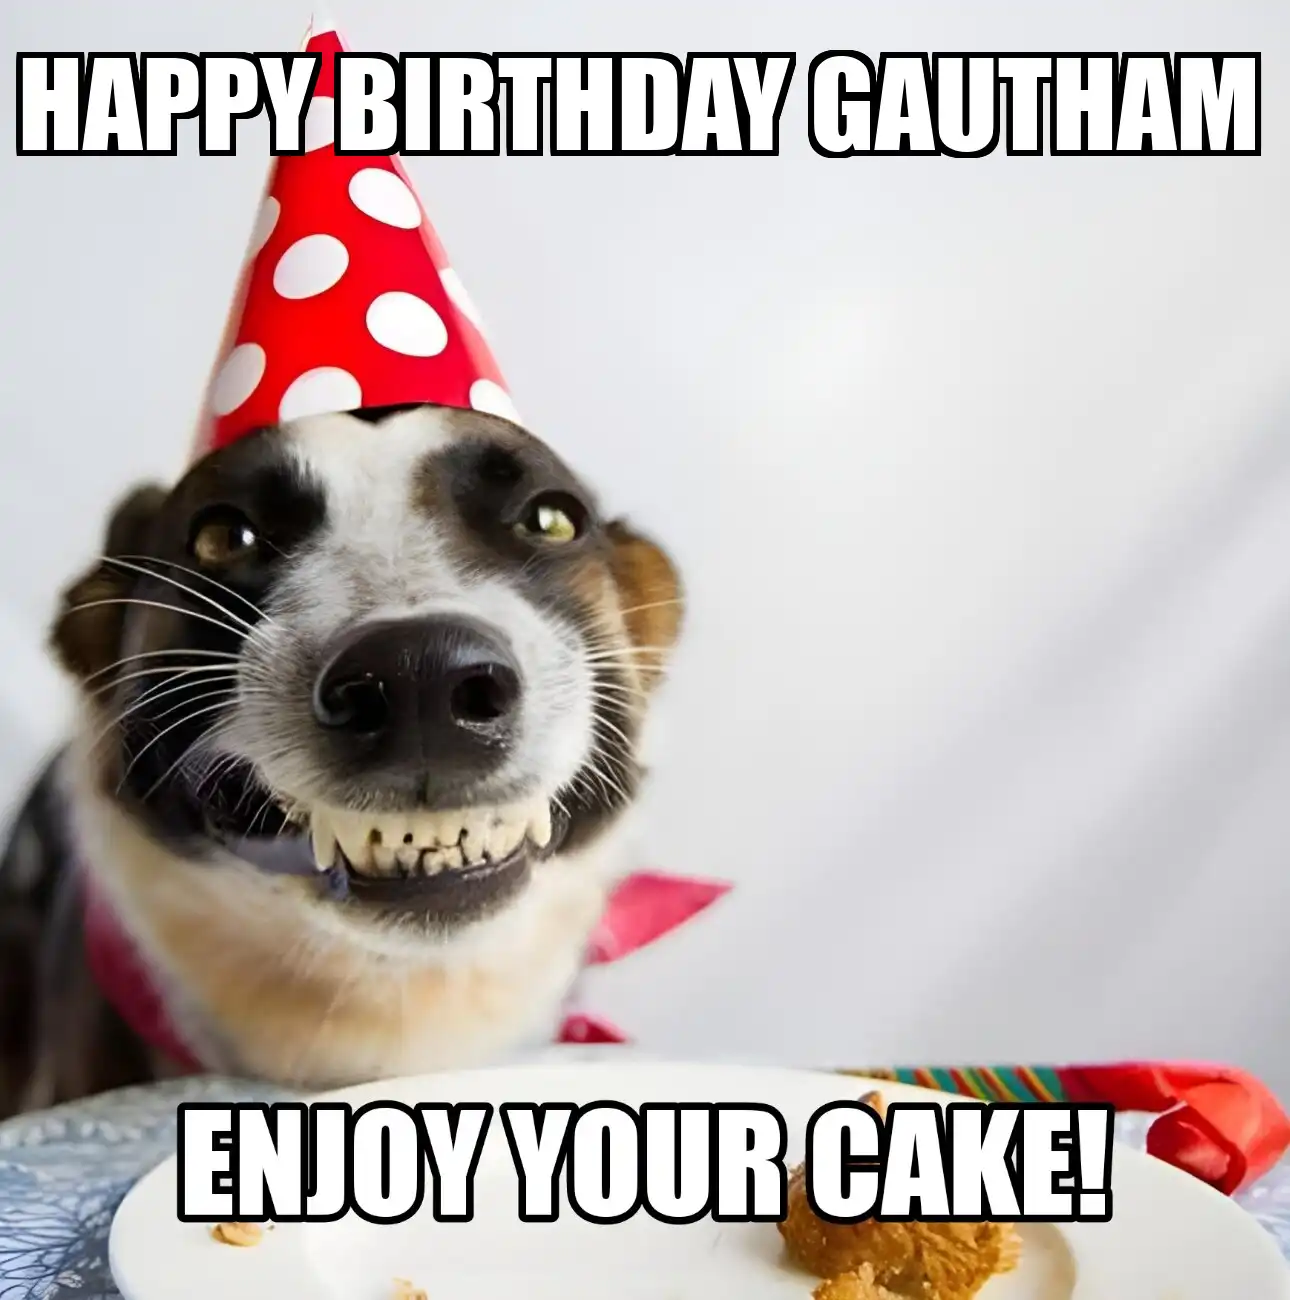 Happy Birthday Gautham Enjoy Your Cake Dog Meme